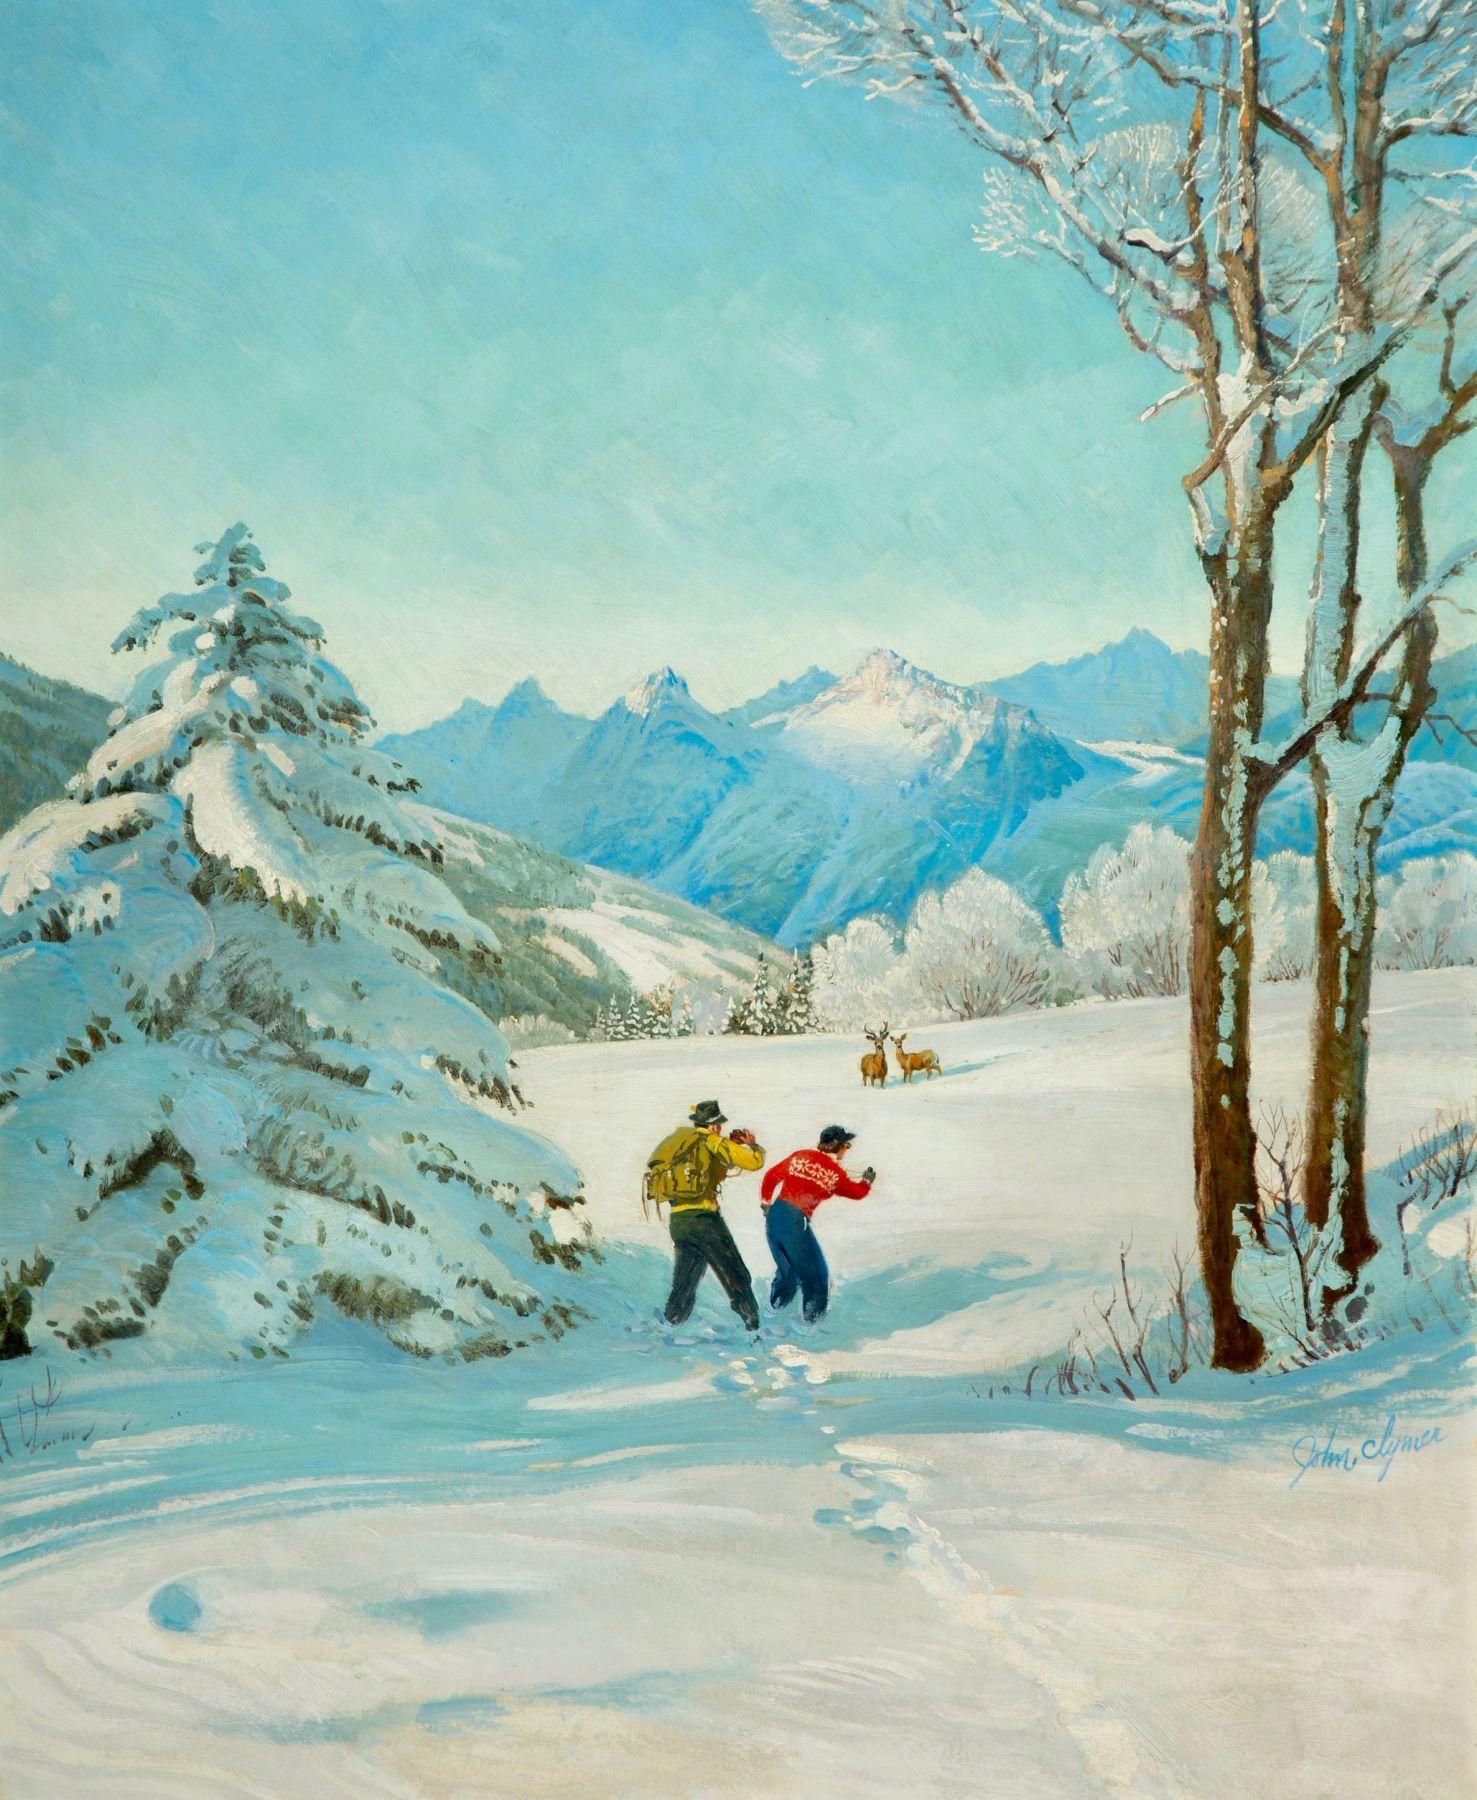 John Ford Clymer Landscape Painting - When Couples Meet, Ballantine Beer advertisement, 1953